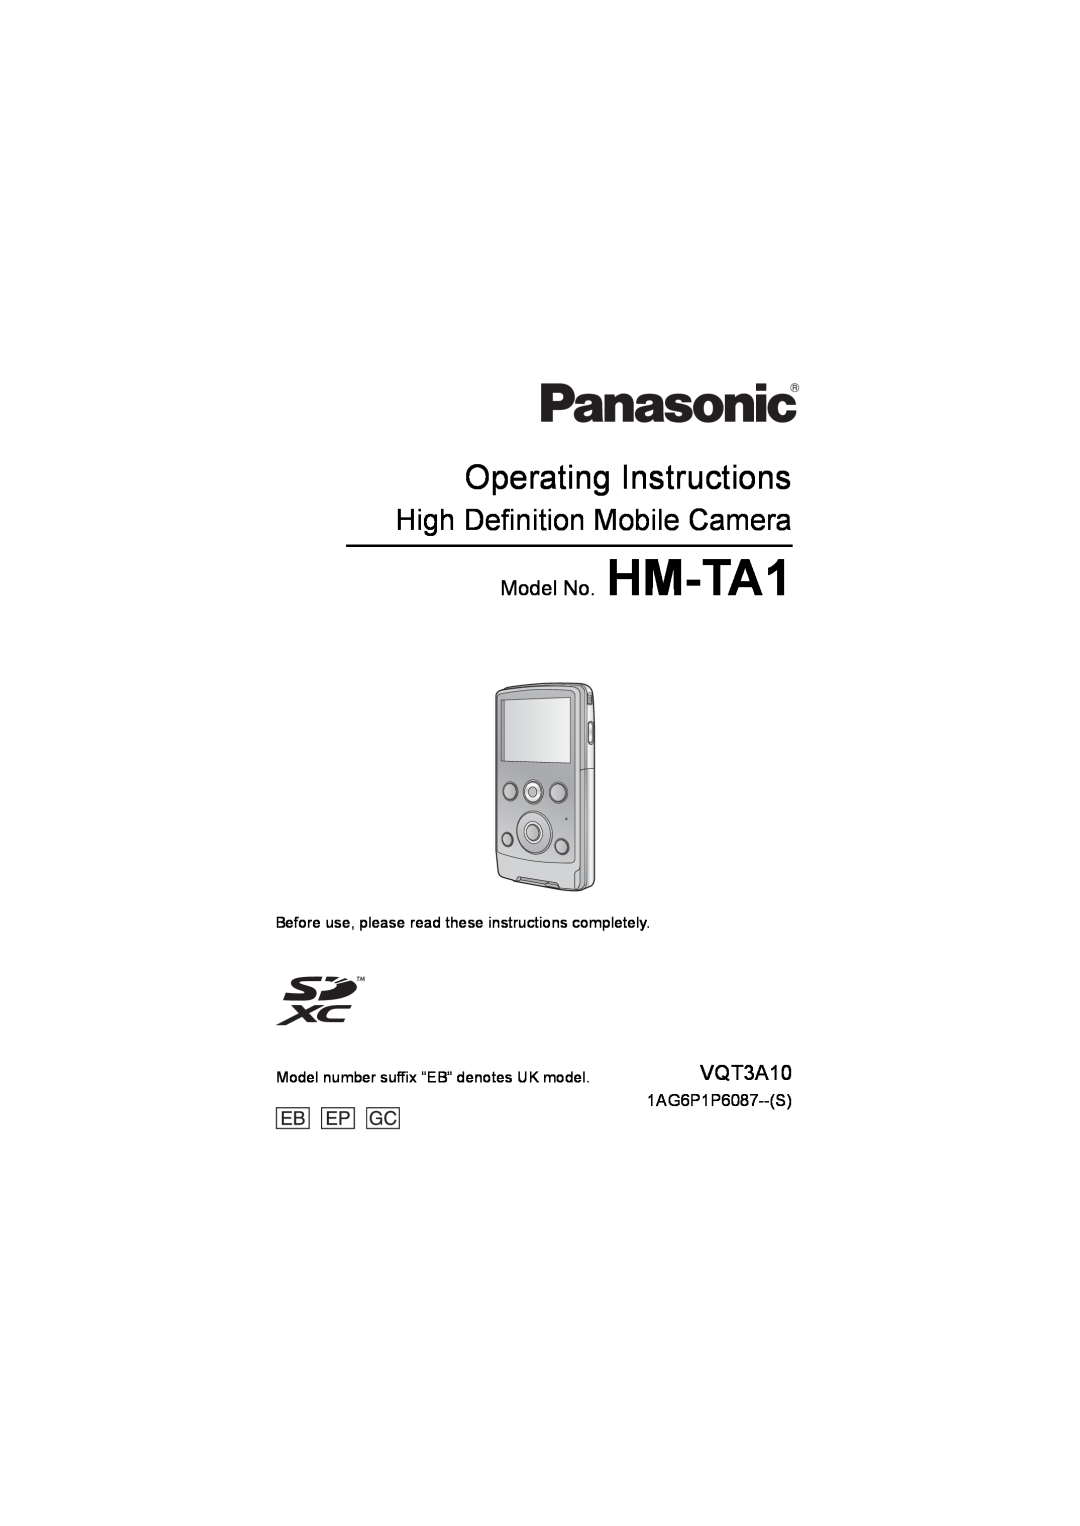 Panasonic operating instructions Model No. HM-TA1, VQT3A10, Operating Instructions, High Definition Mobile Camera 